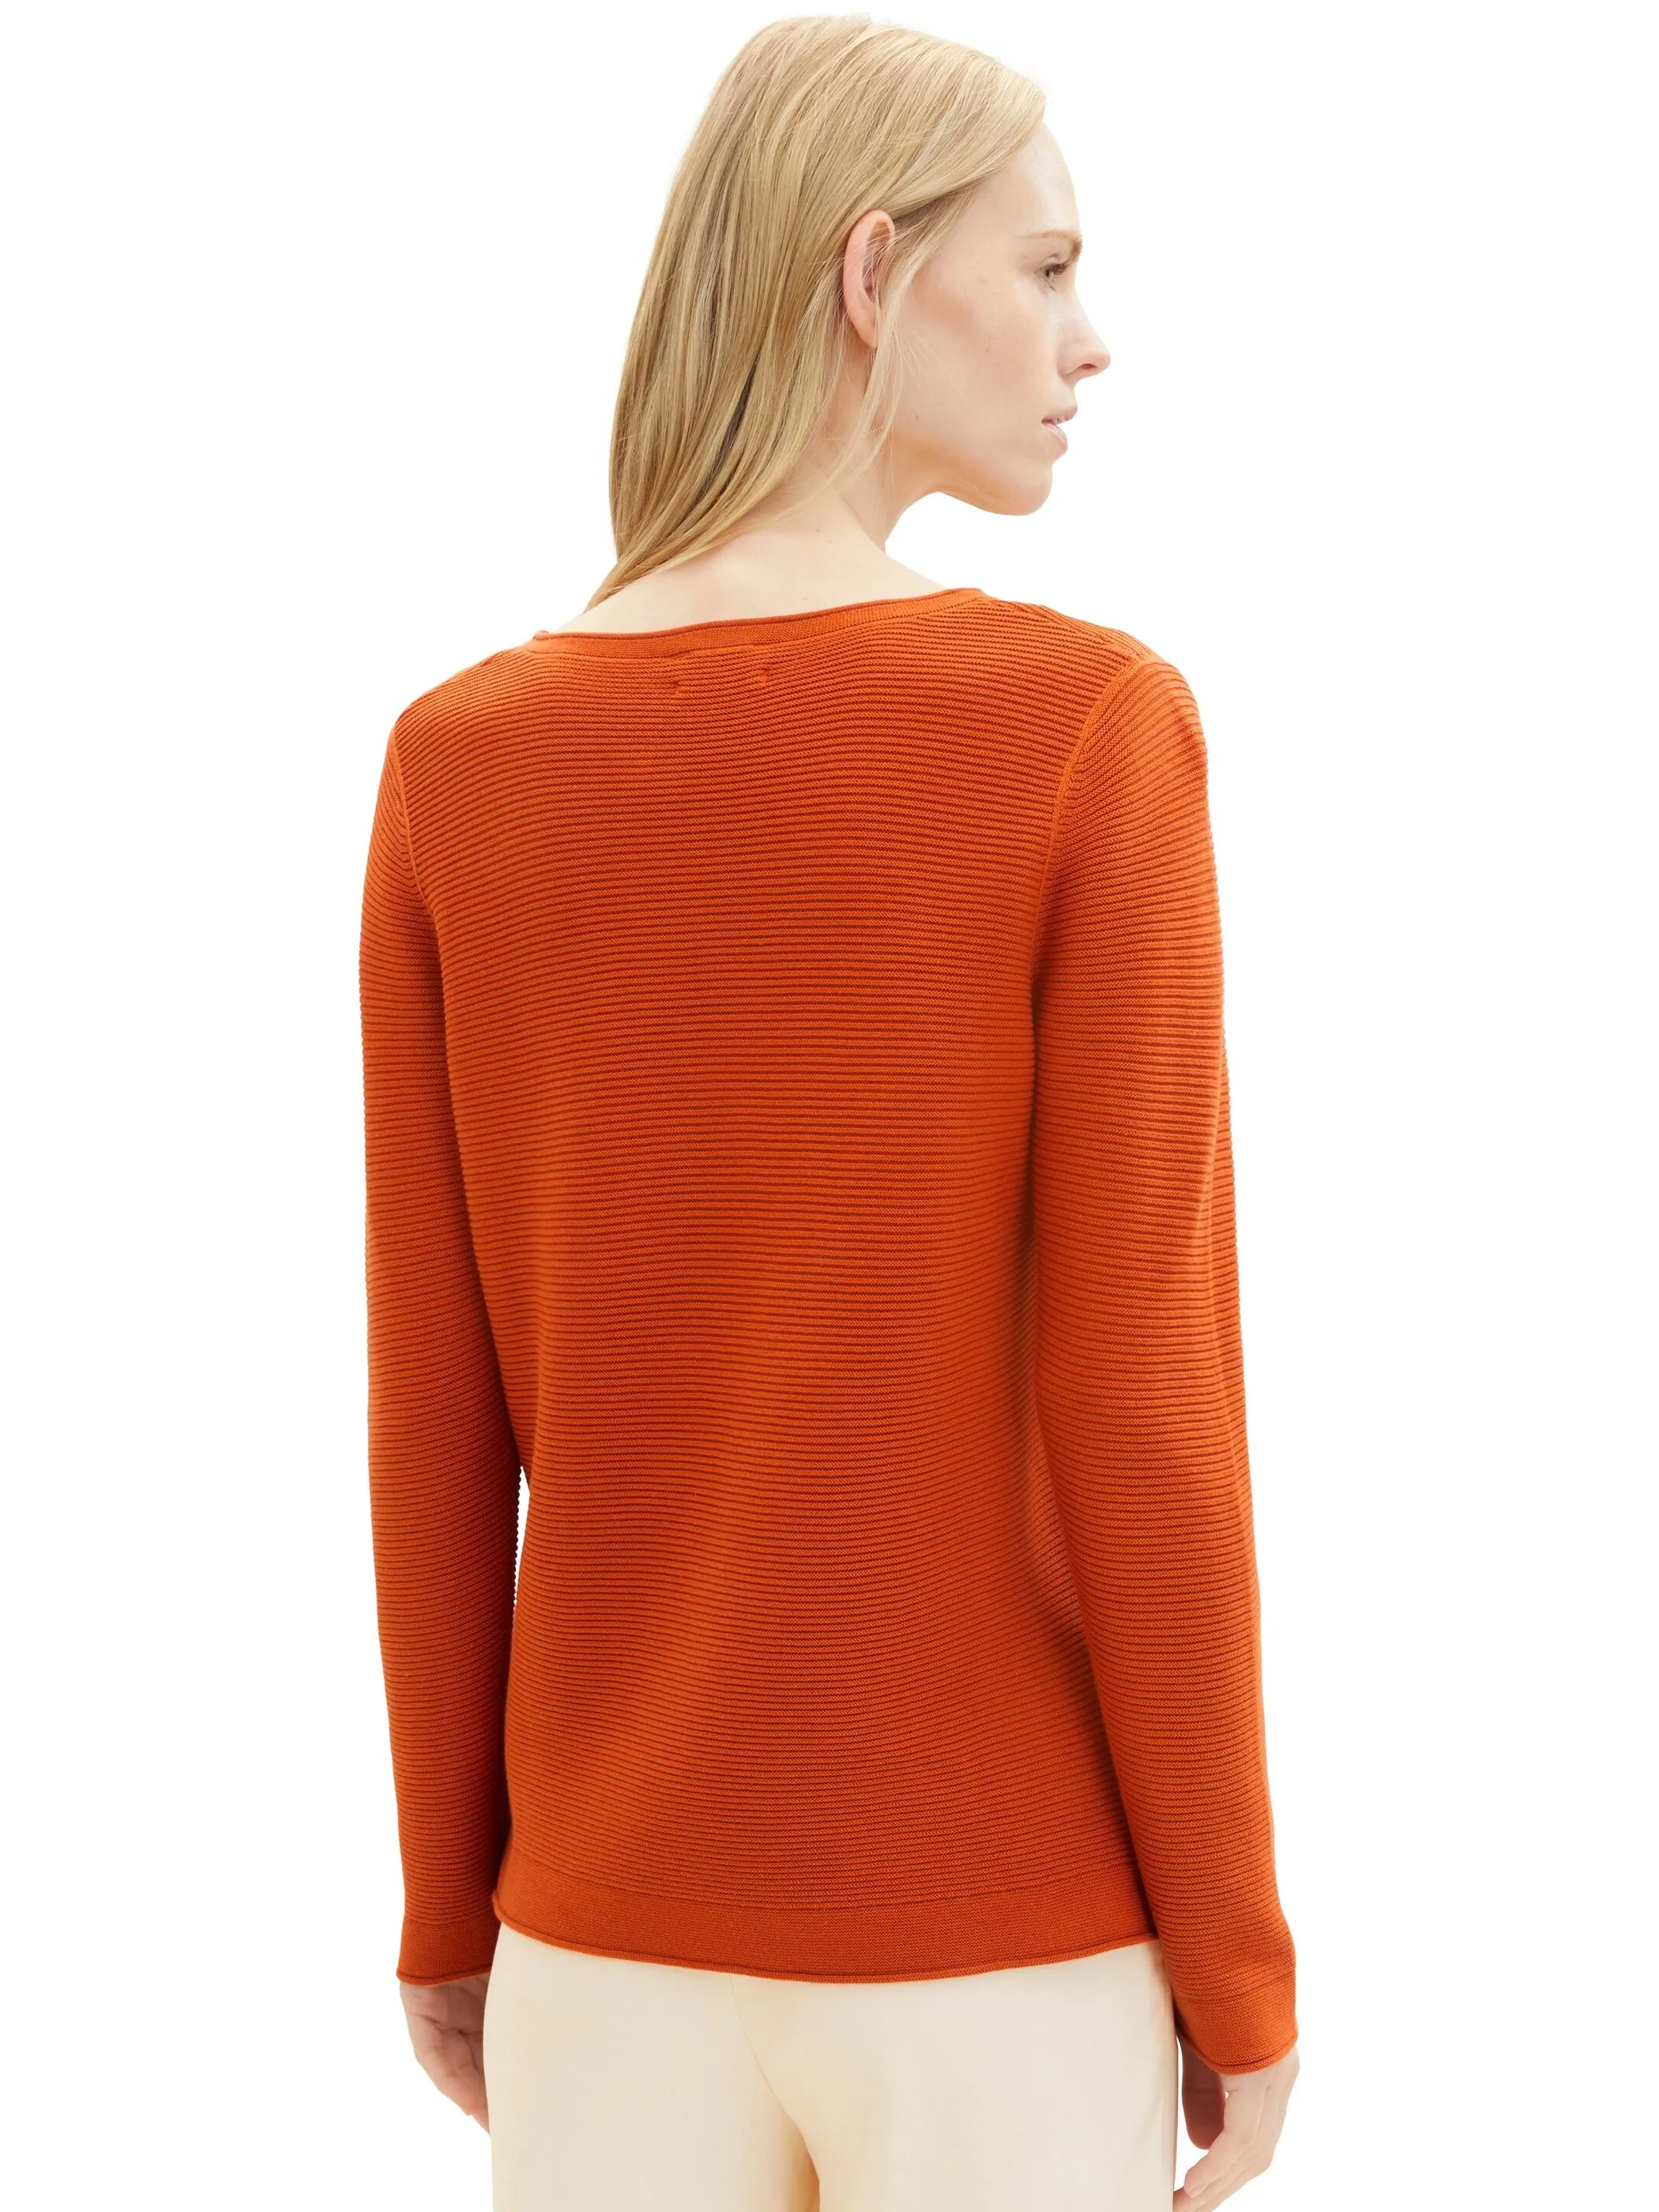 Tom Tailor 1016350 NOS sweater new ottoma Orange 827729 19772 2